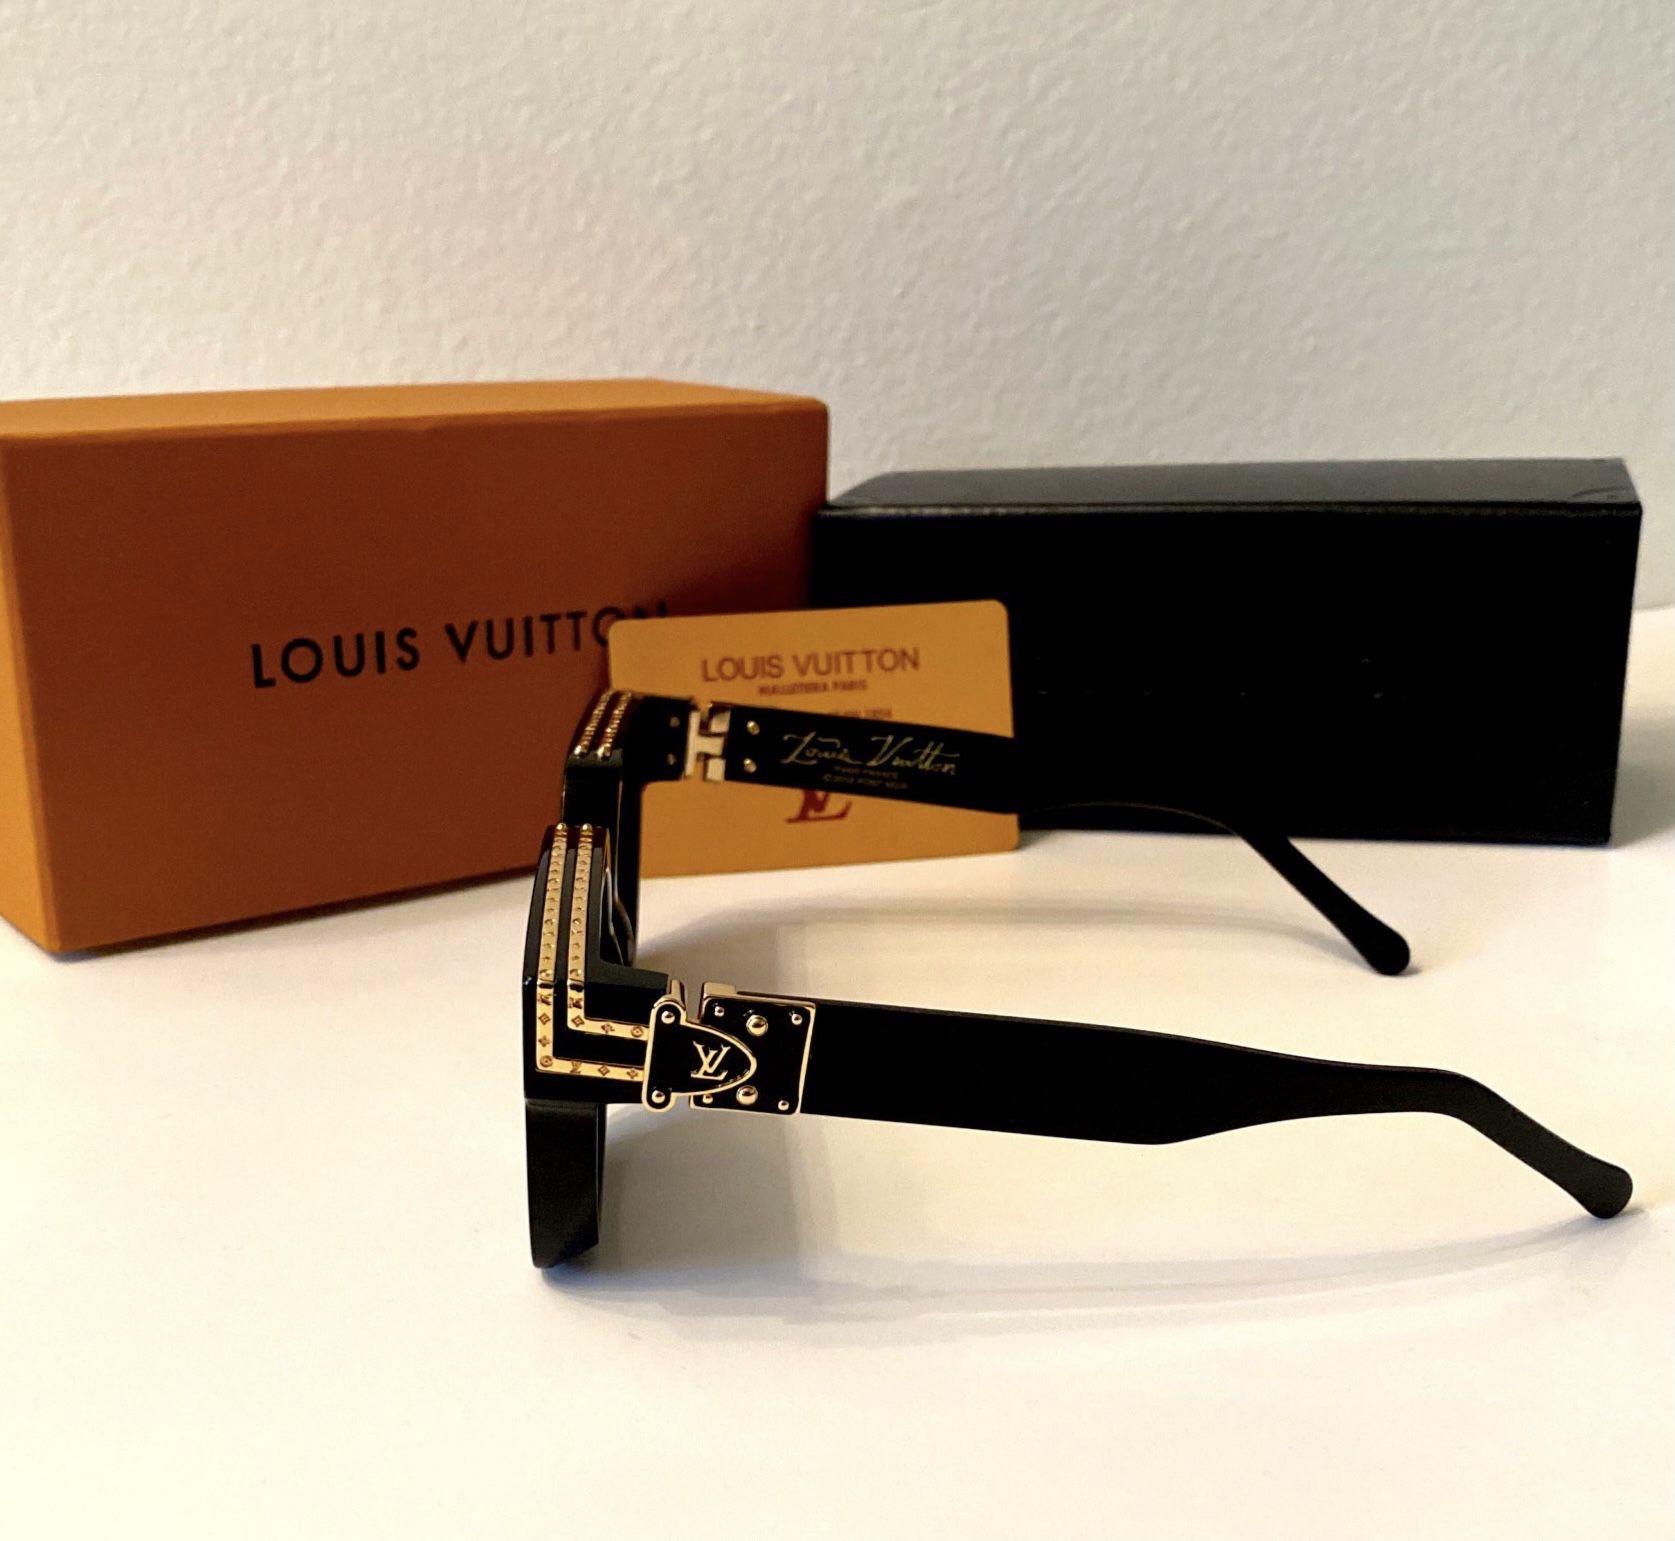 Louis Vuitton Sunglasses for Sale in Anaheim, CA - OfferUp